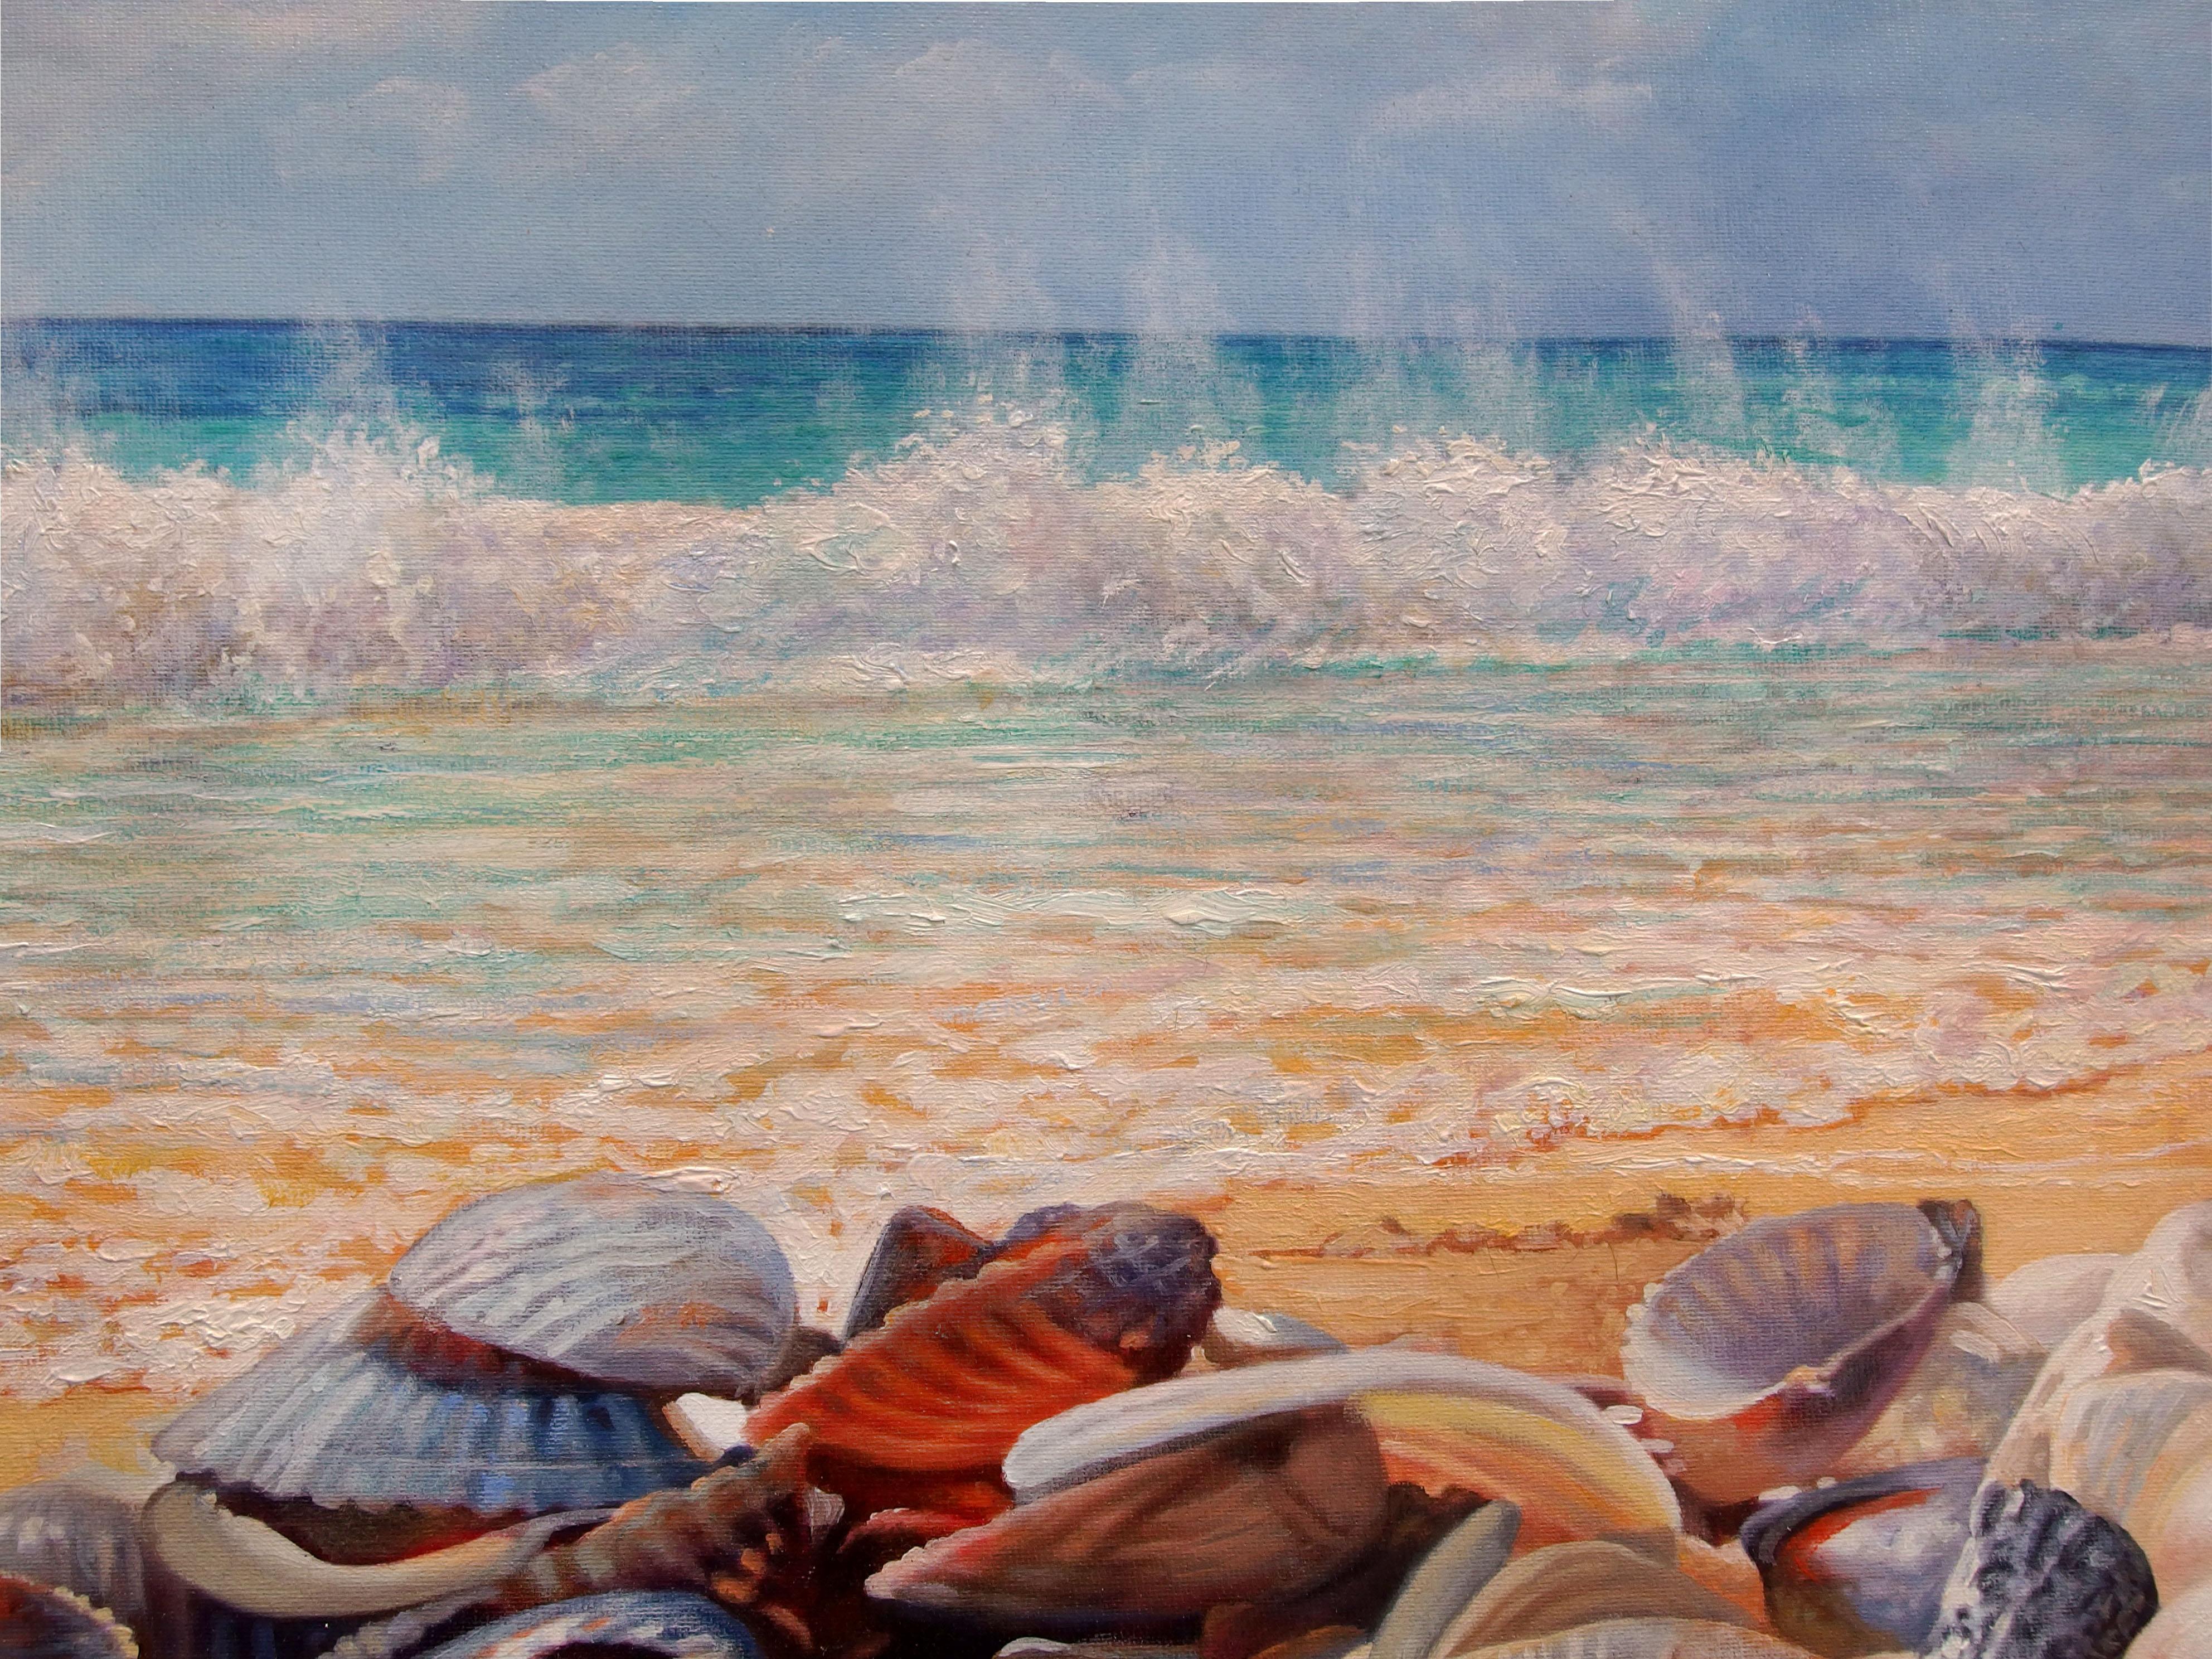 Sea Shells On The Beach - Painting by Zbigniew Kopania